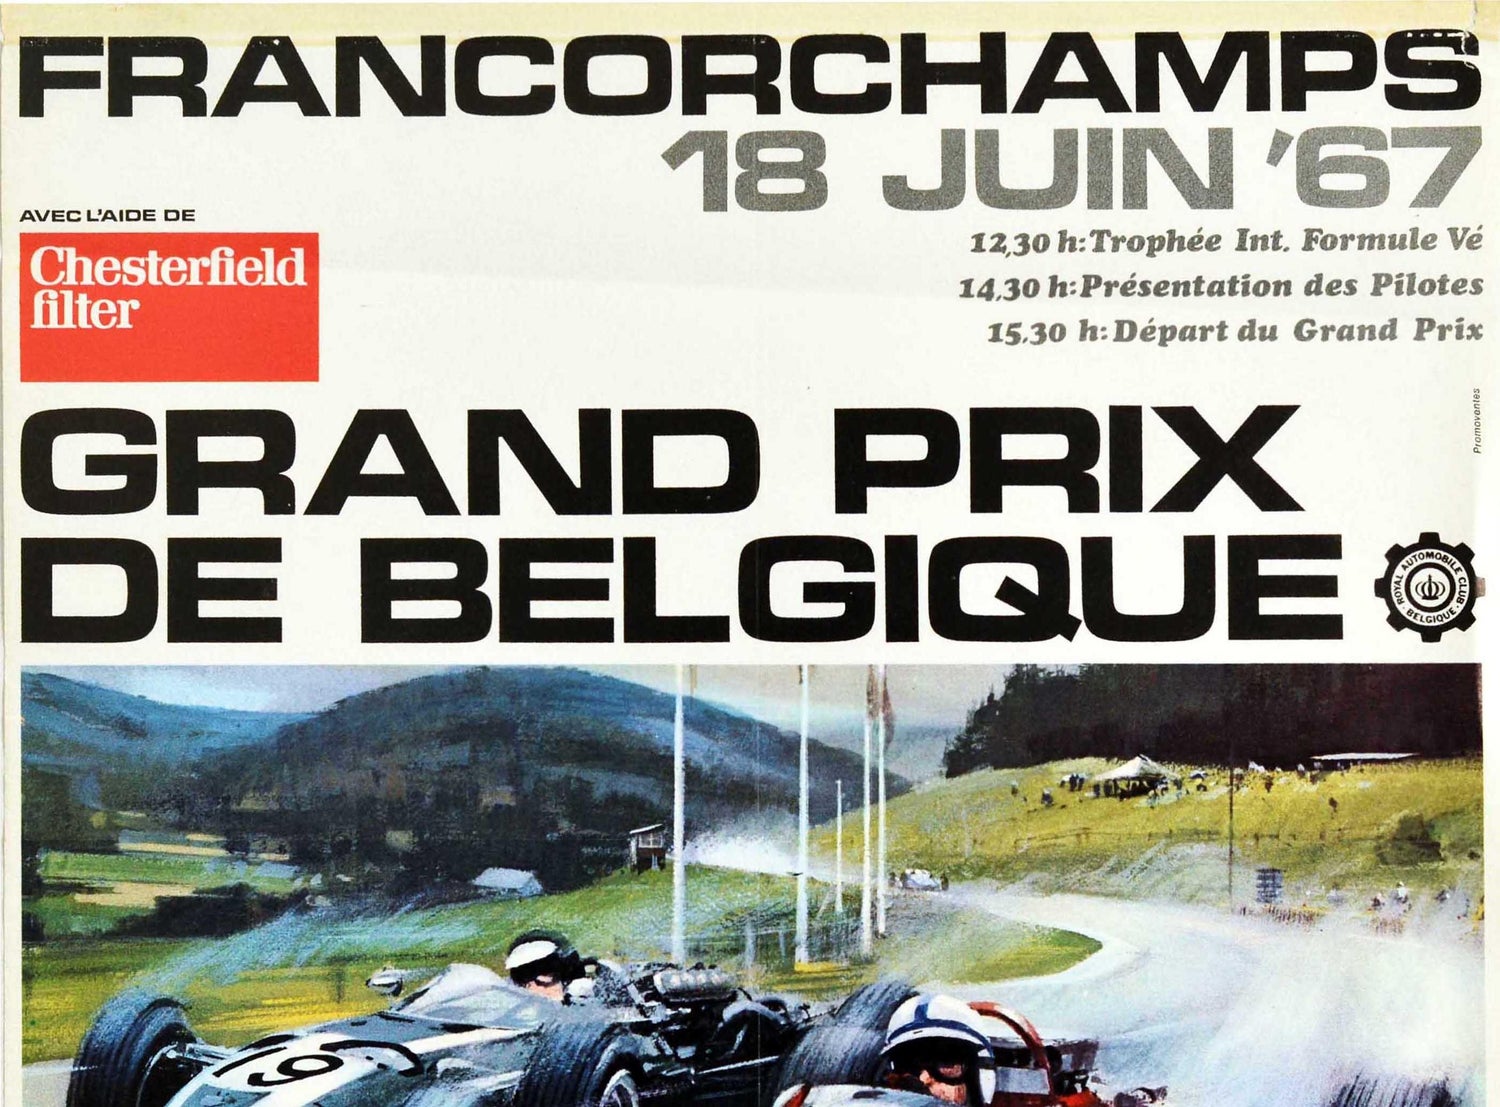 1954 Grosse Preis Von Belgien Vintage Style Auto Racing Poster 24x32